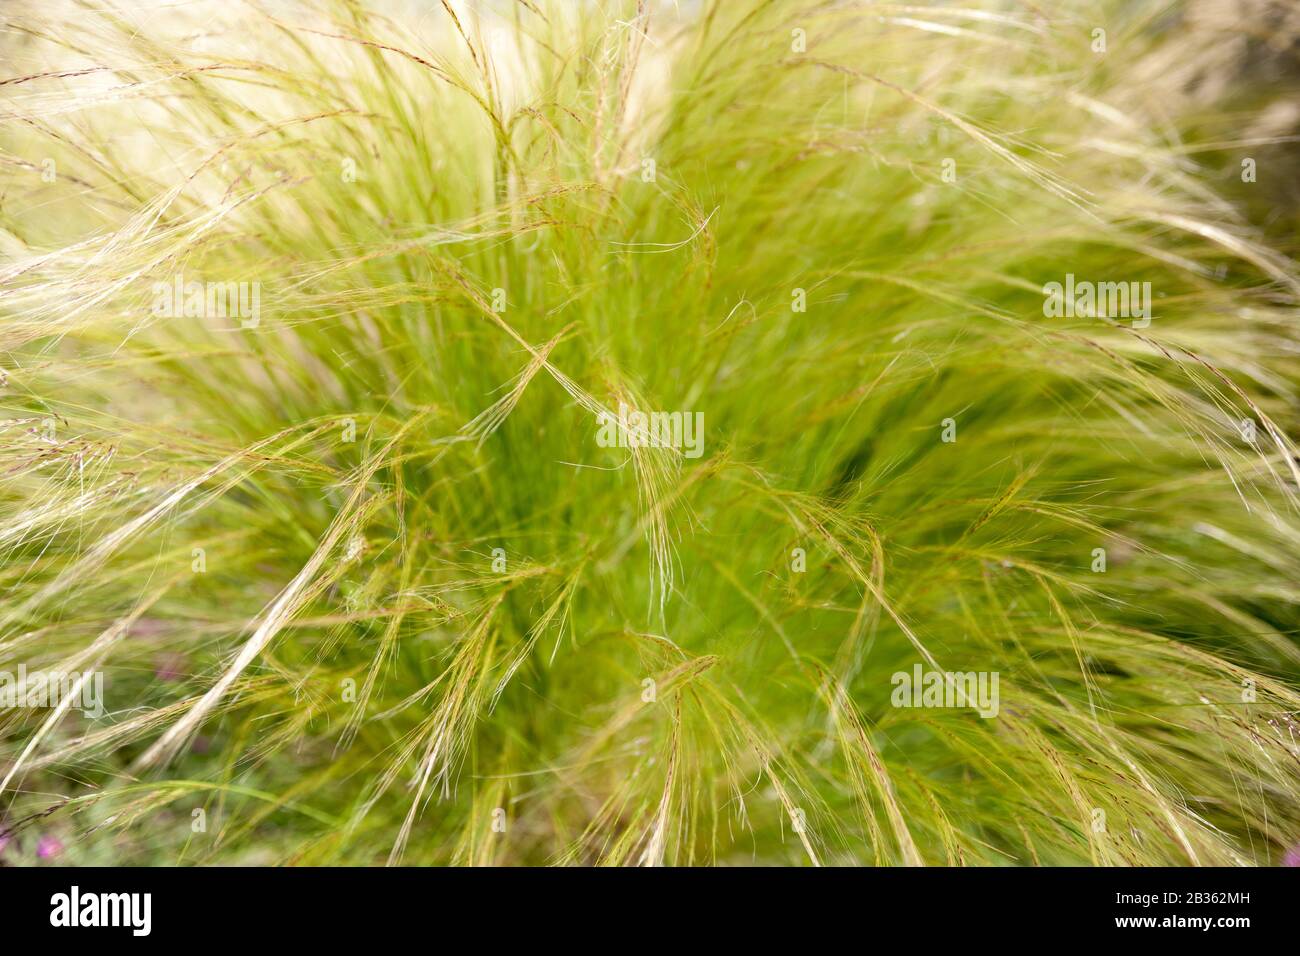 Detail of green ornamental grasses Stock Photo